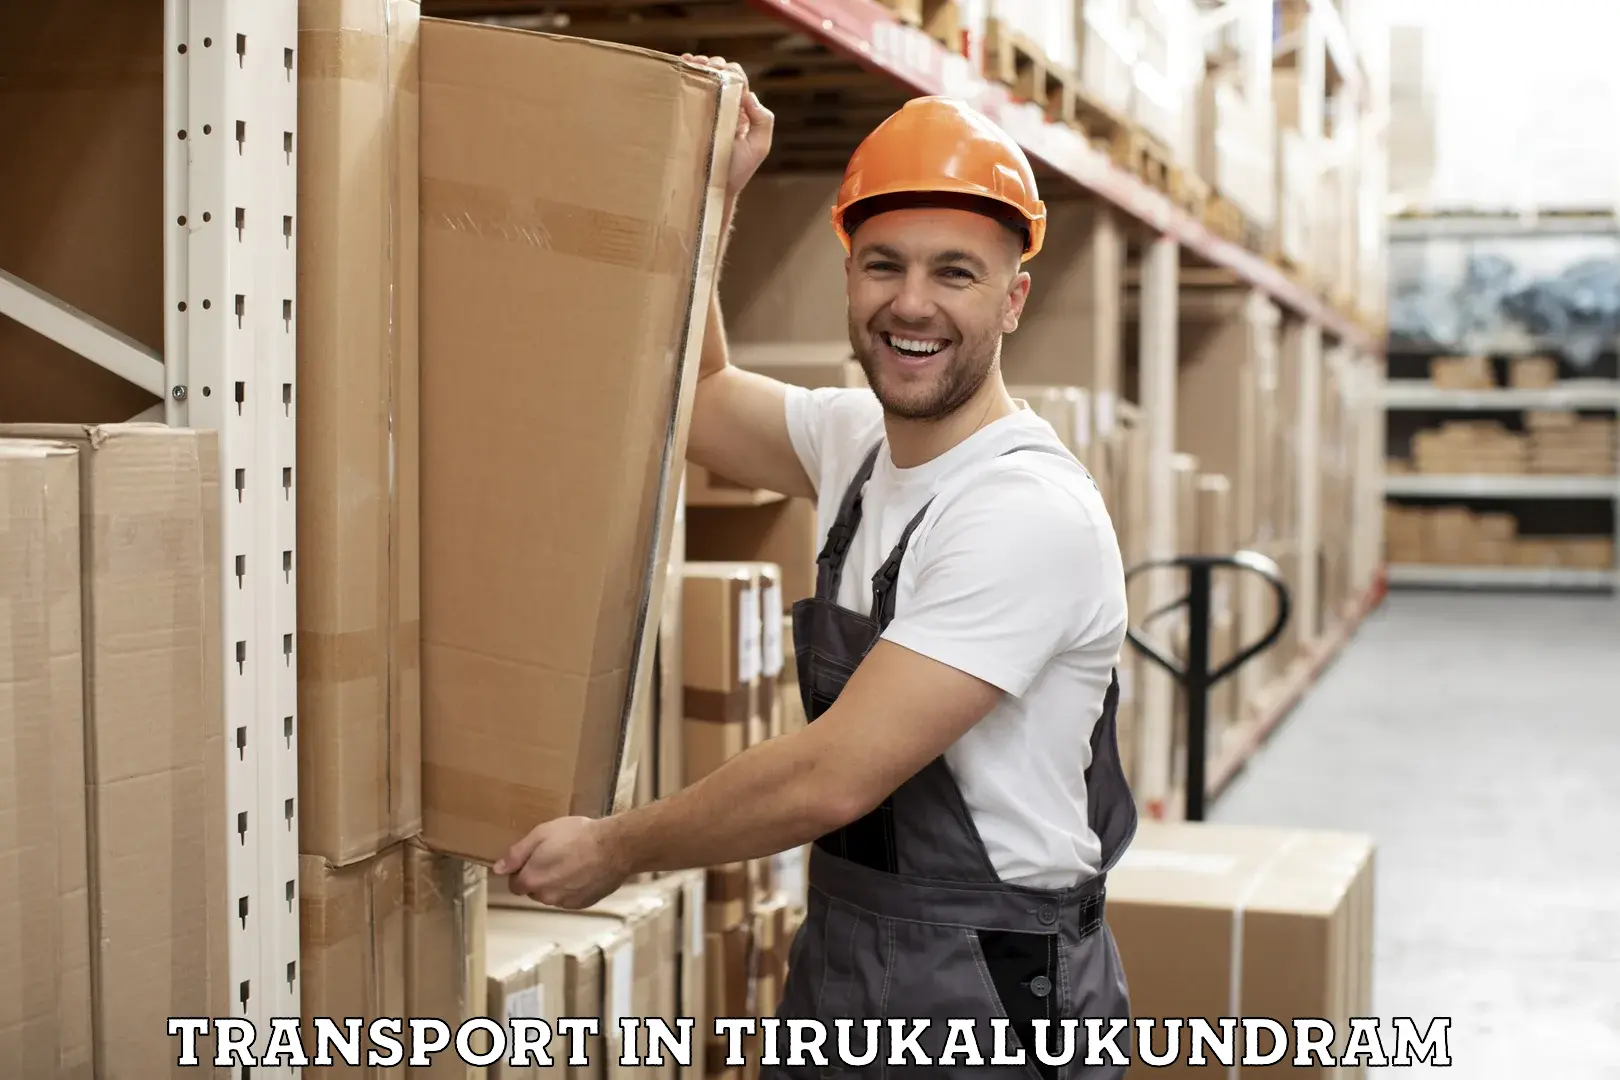 Daily parcel service transport in Tirukalukundram